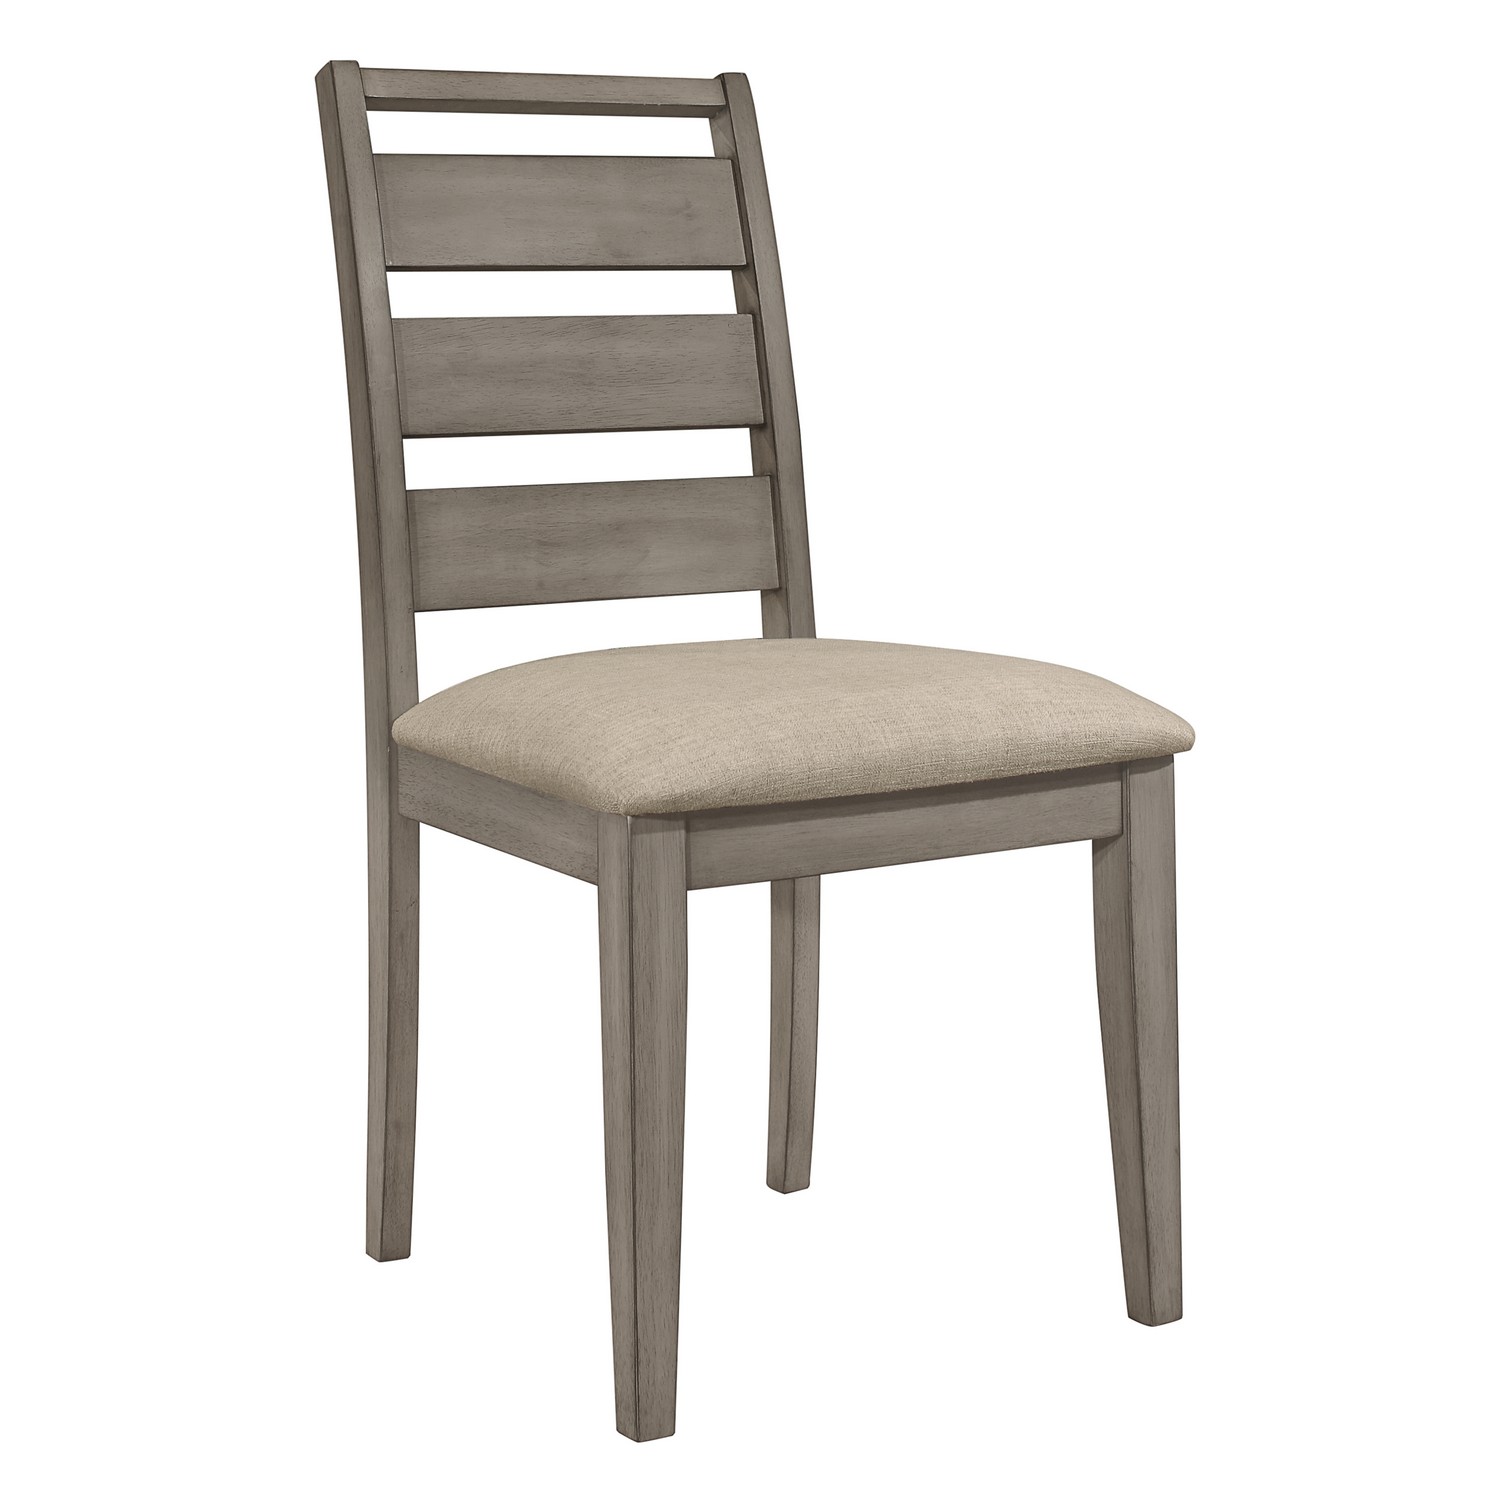 Homelegance Bainbridge Side Chair - Weathered Gray